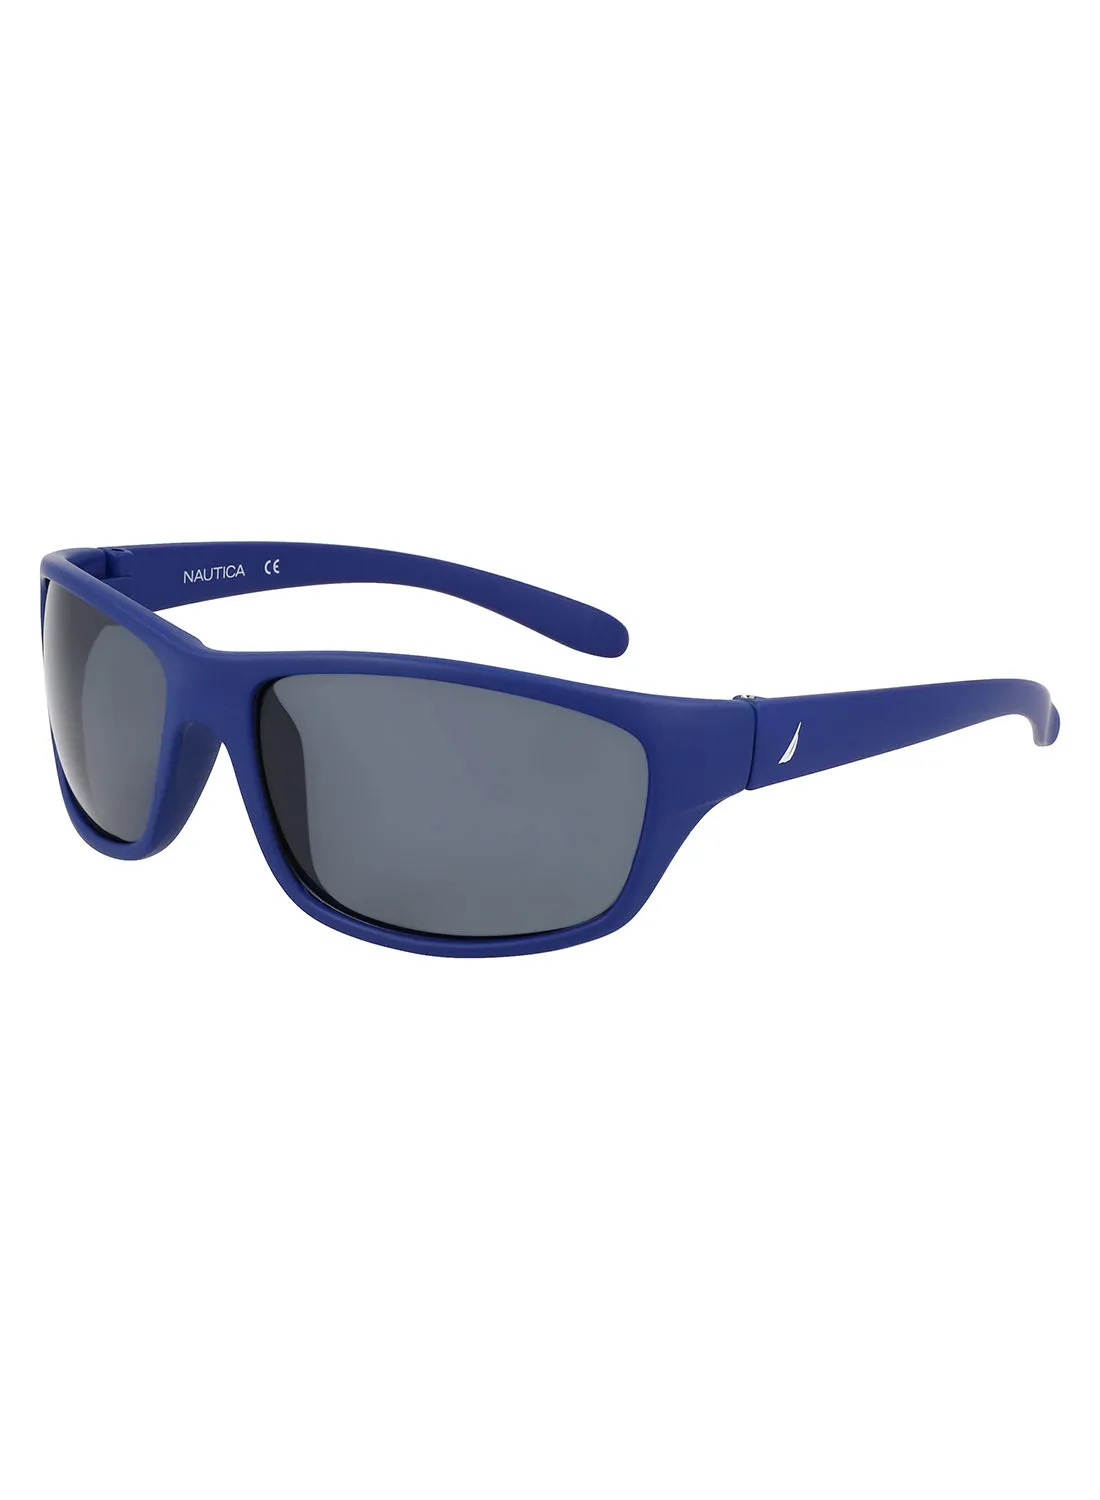 NAUTICA Men's Rectangular Sunglasses - 39240-420-6216 - Lens Size: 62 Mm